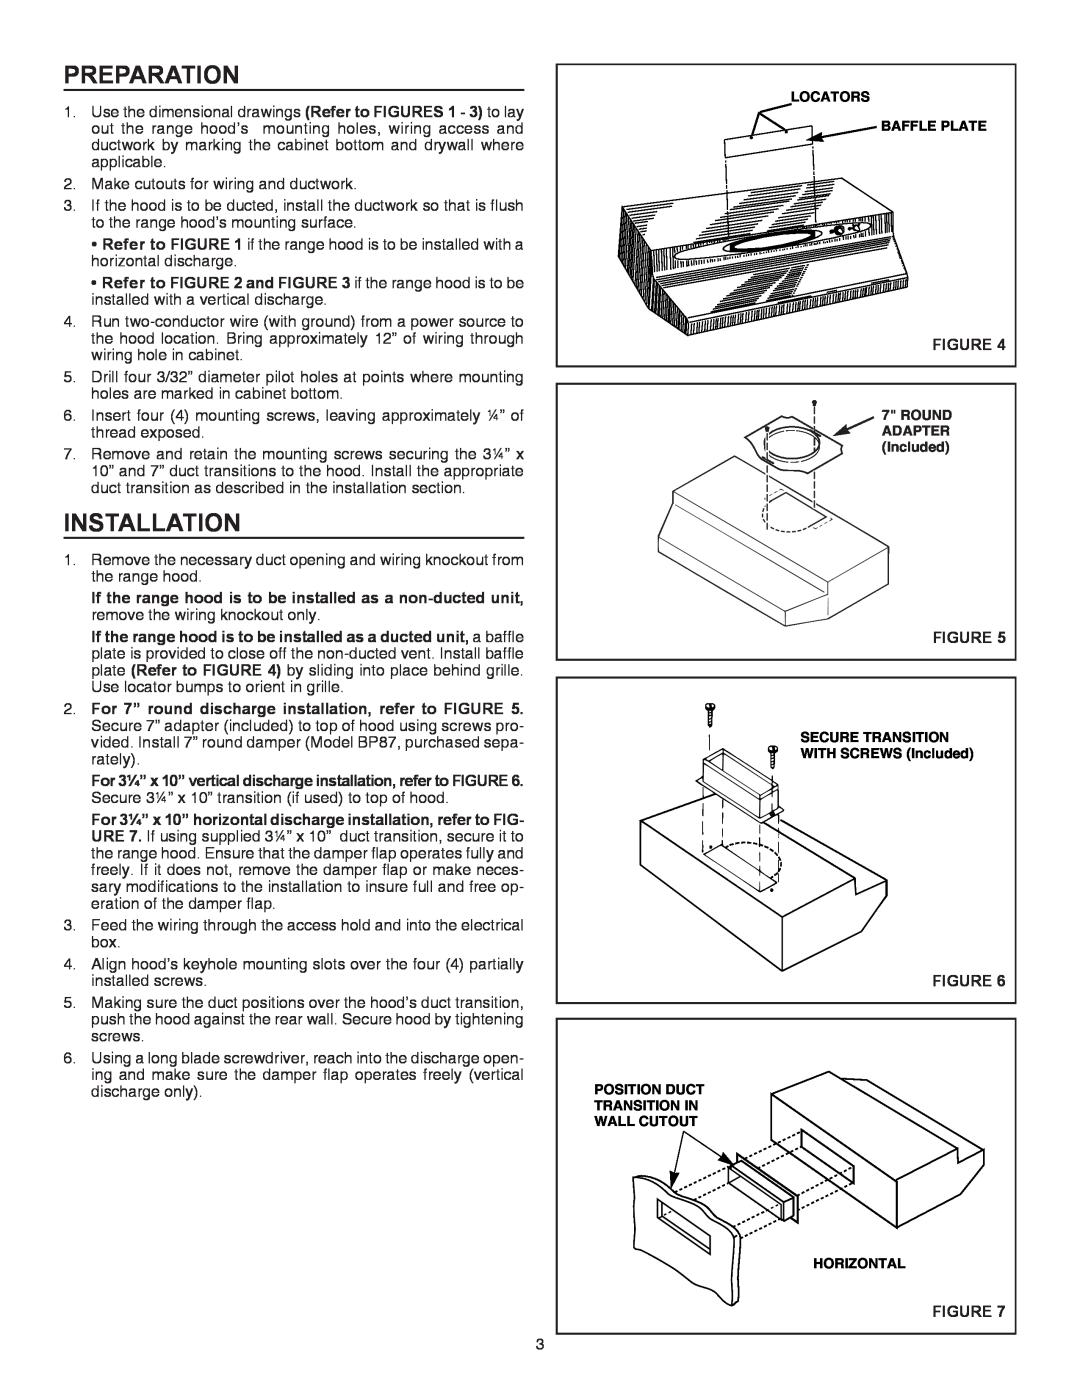 Broan QT230WW installation instructions Preparation, Installation, Figure 